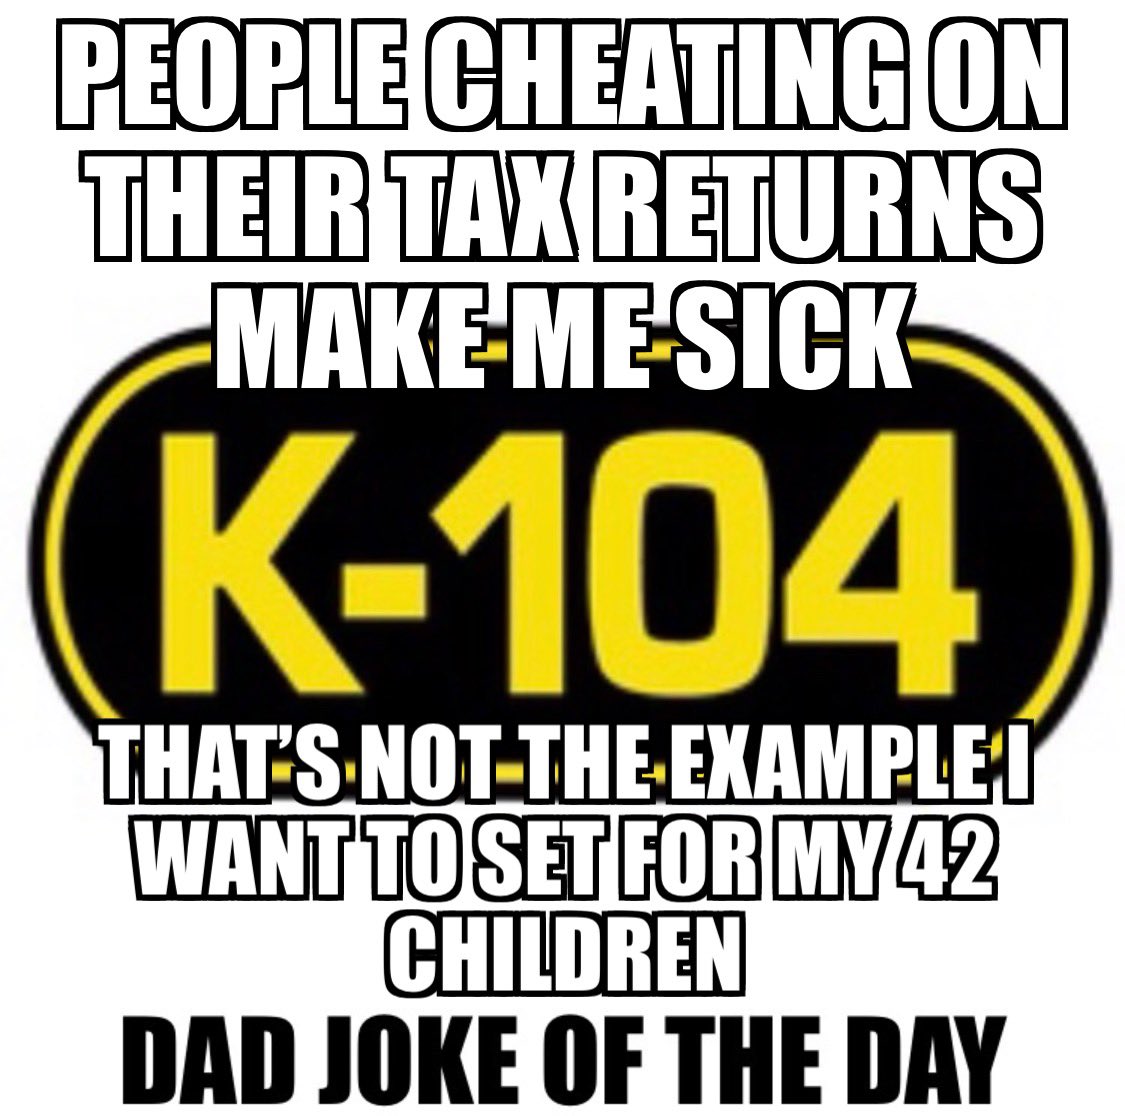 #dadjoke #dadjokes #dadjokeoftheday #joke #people #cheating #tax #returns #taxreturns #sick #example #chlidren